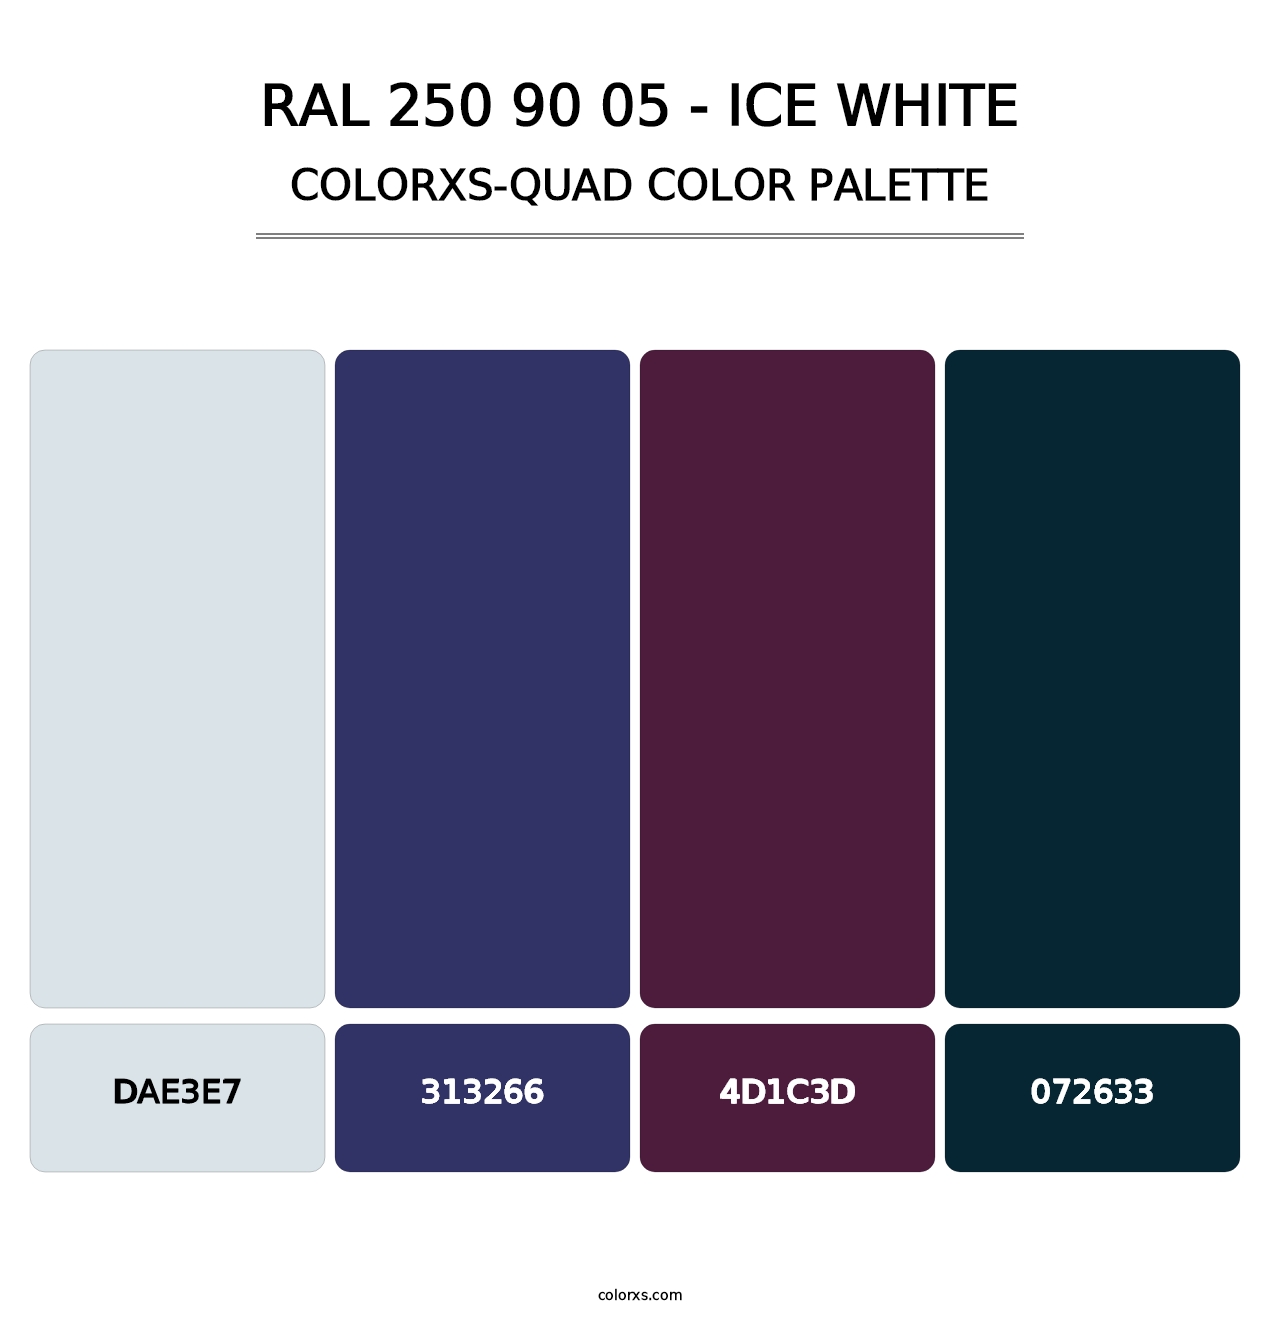 RAL 250 90 05 - Ice White - Colorxs Quad Palette